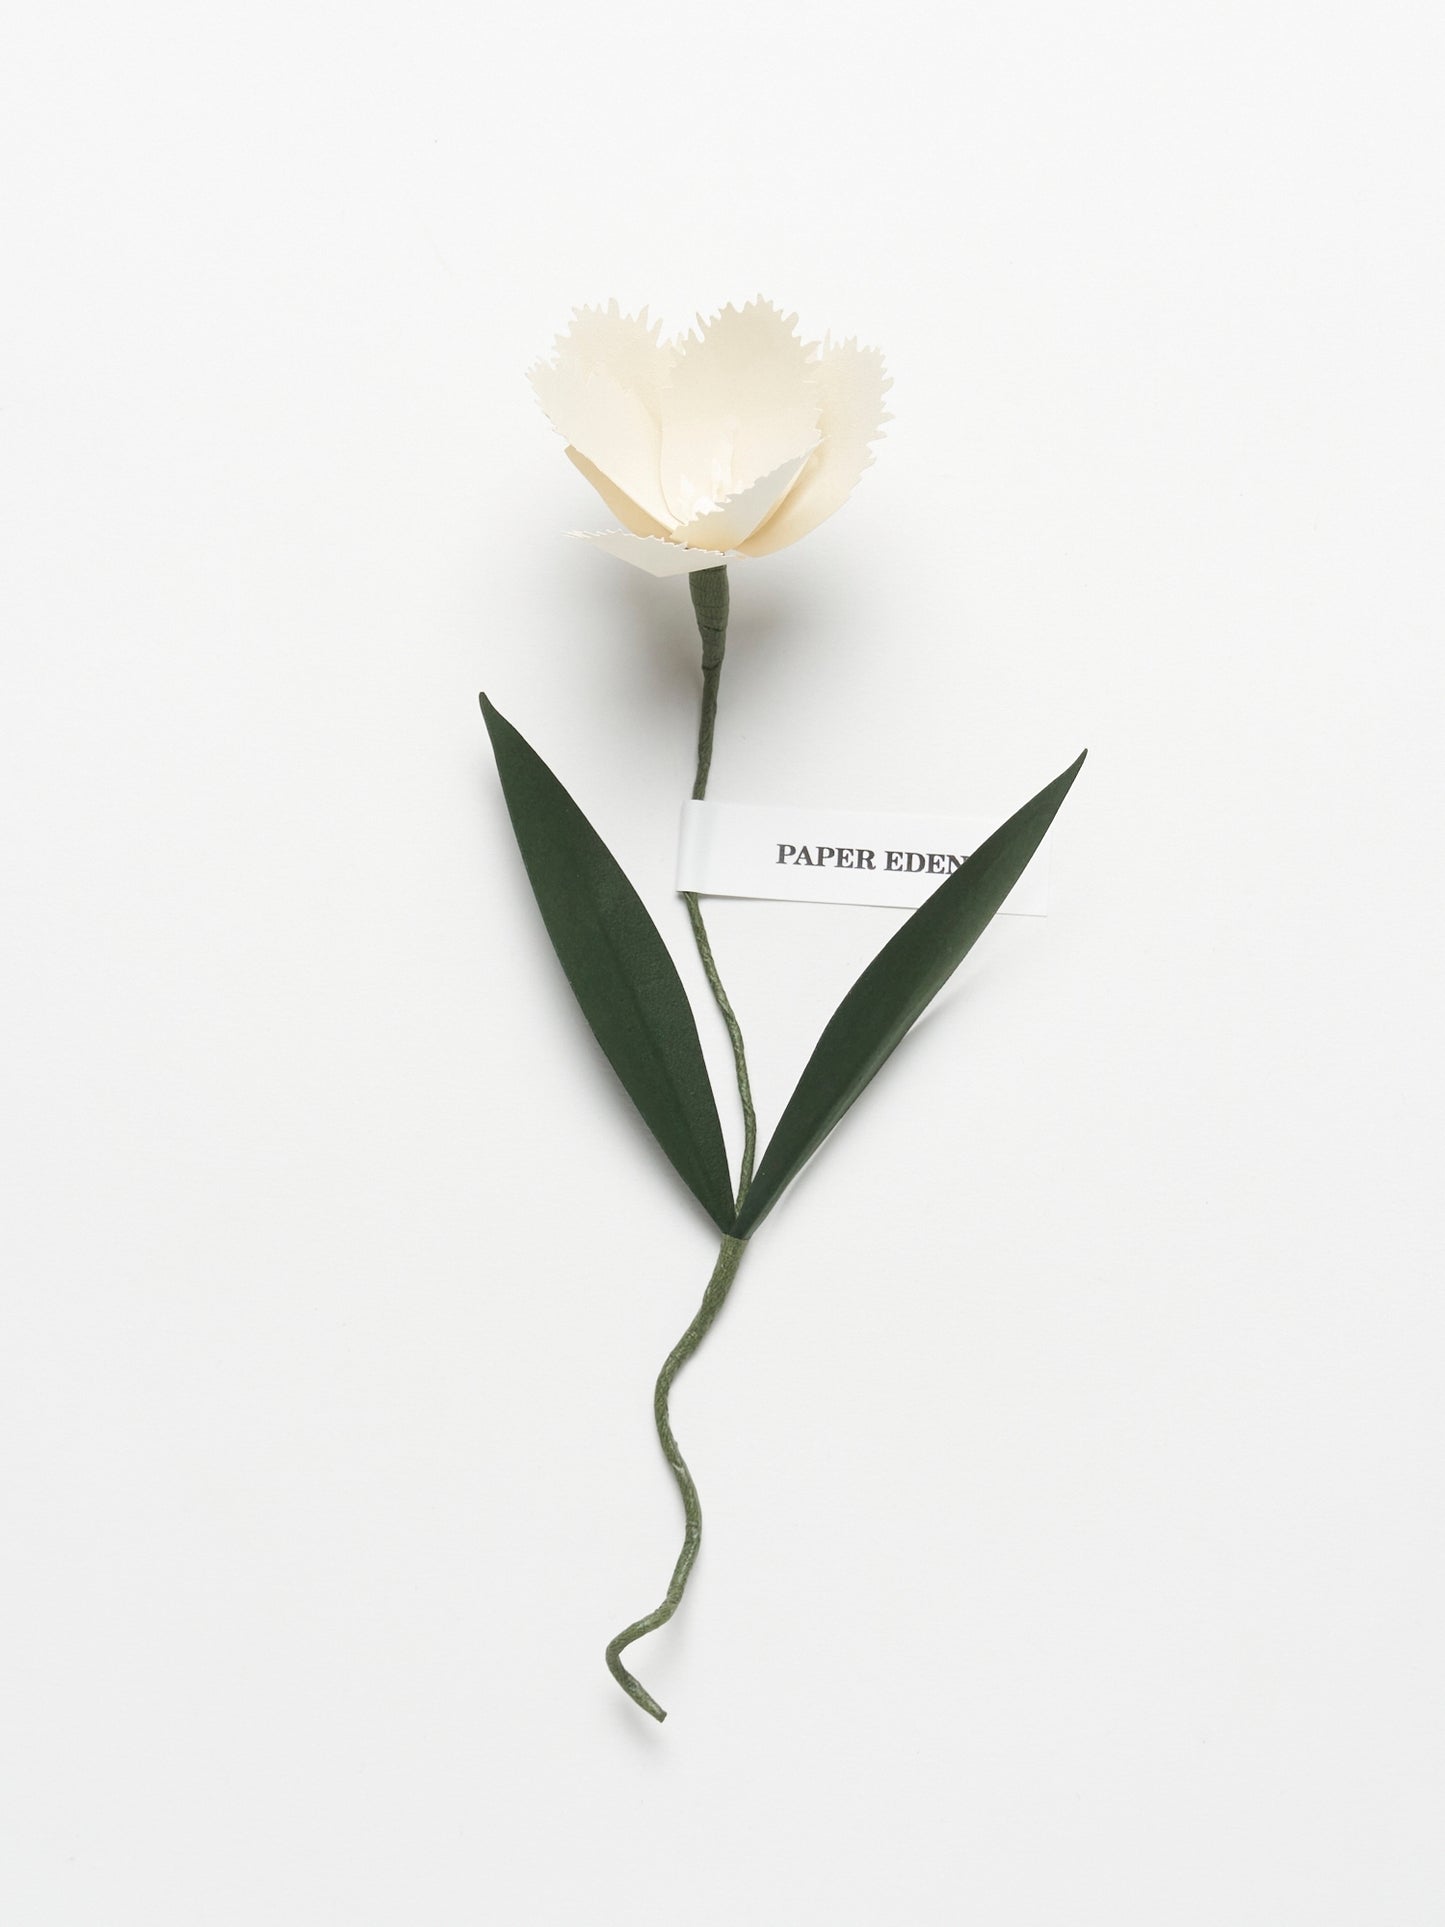 POST FLOWER “PAPER EDEN:Tulip”